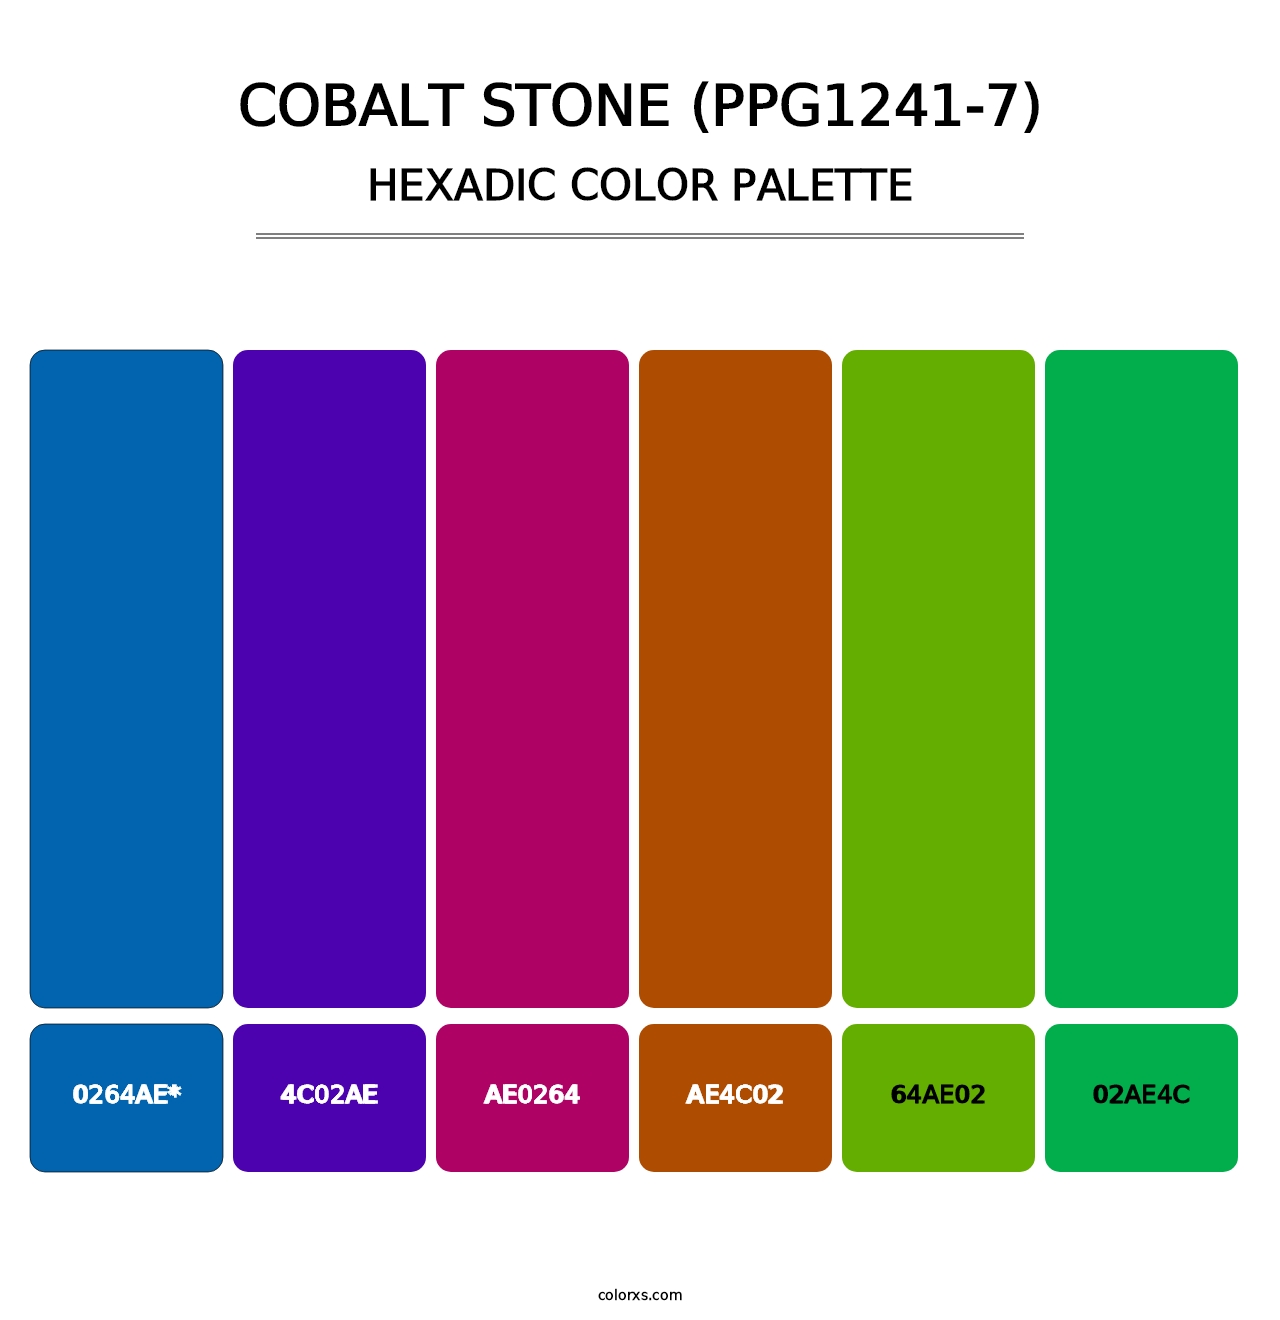 Cobalt Stone (PPG1241-7) - Hexadic Color Palette